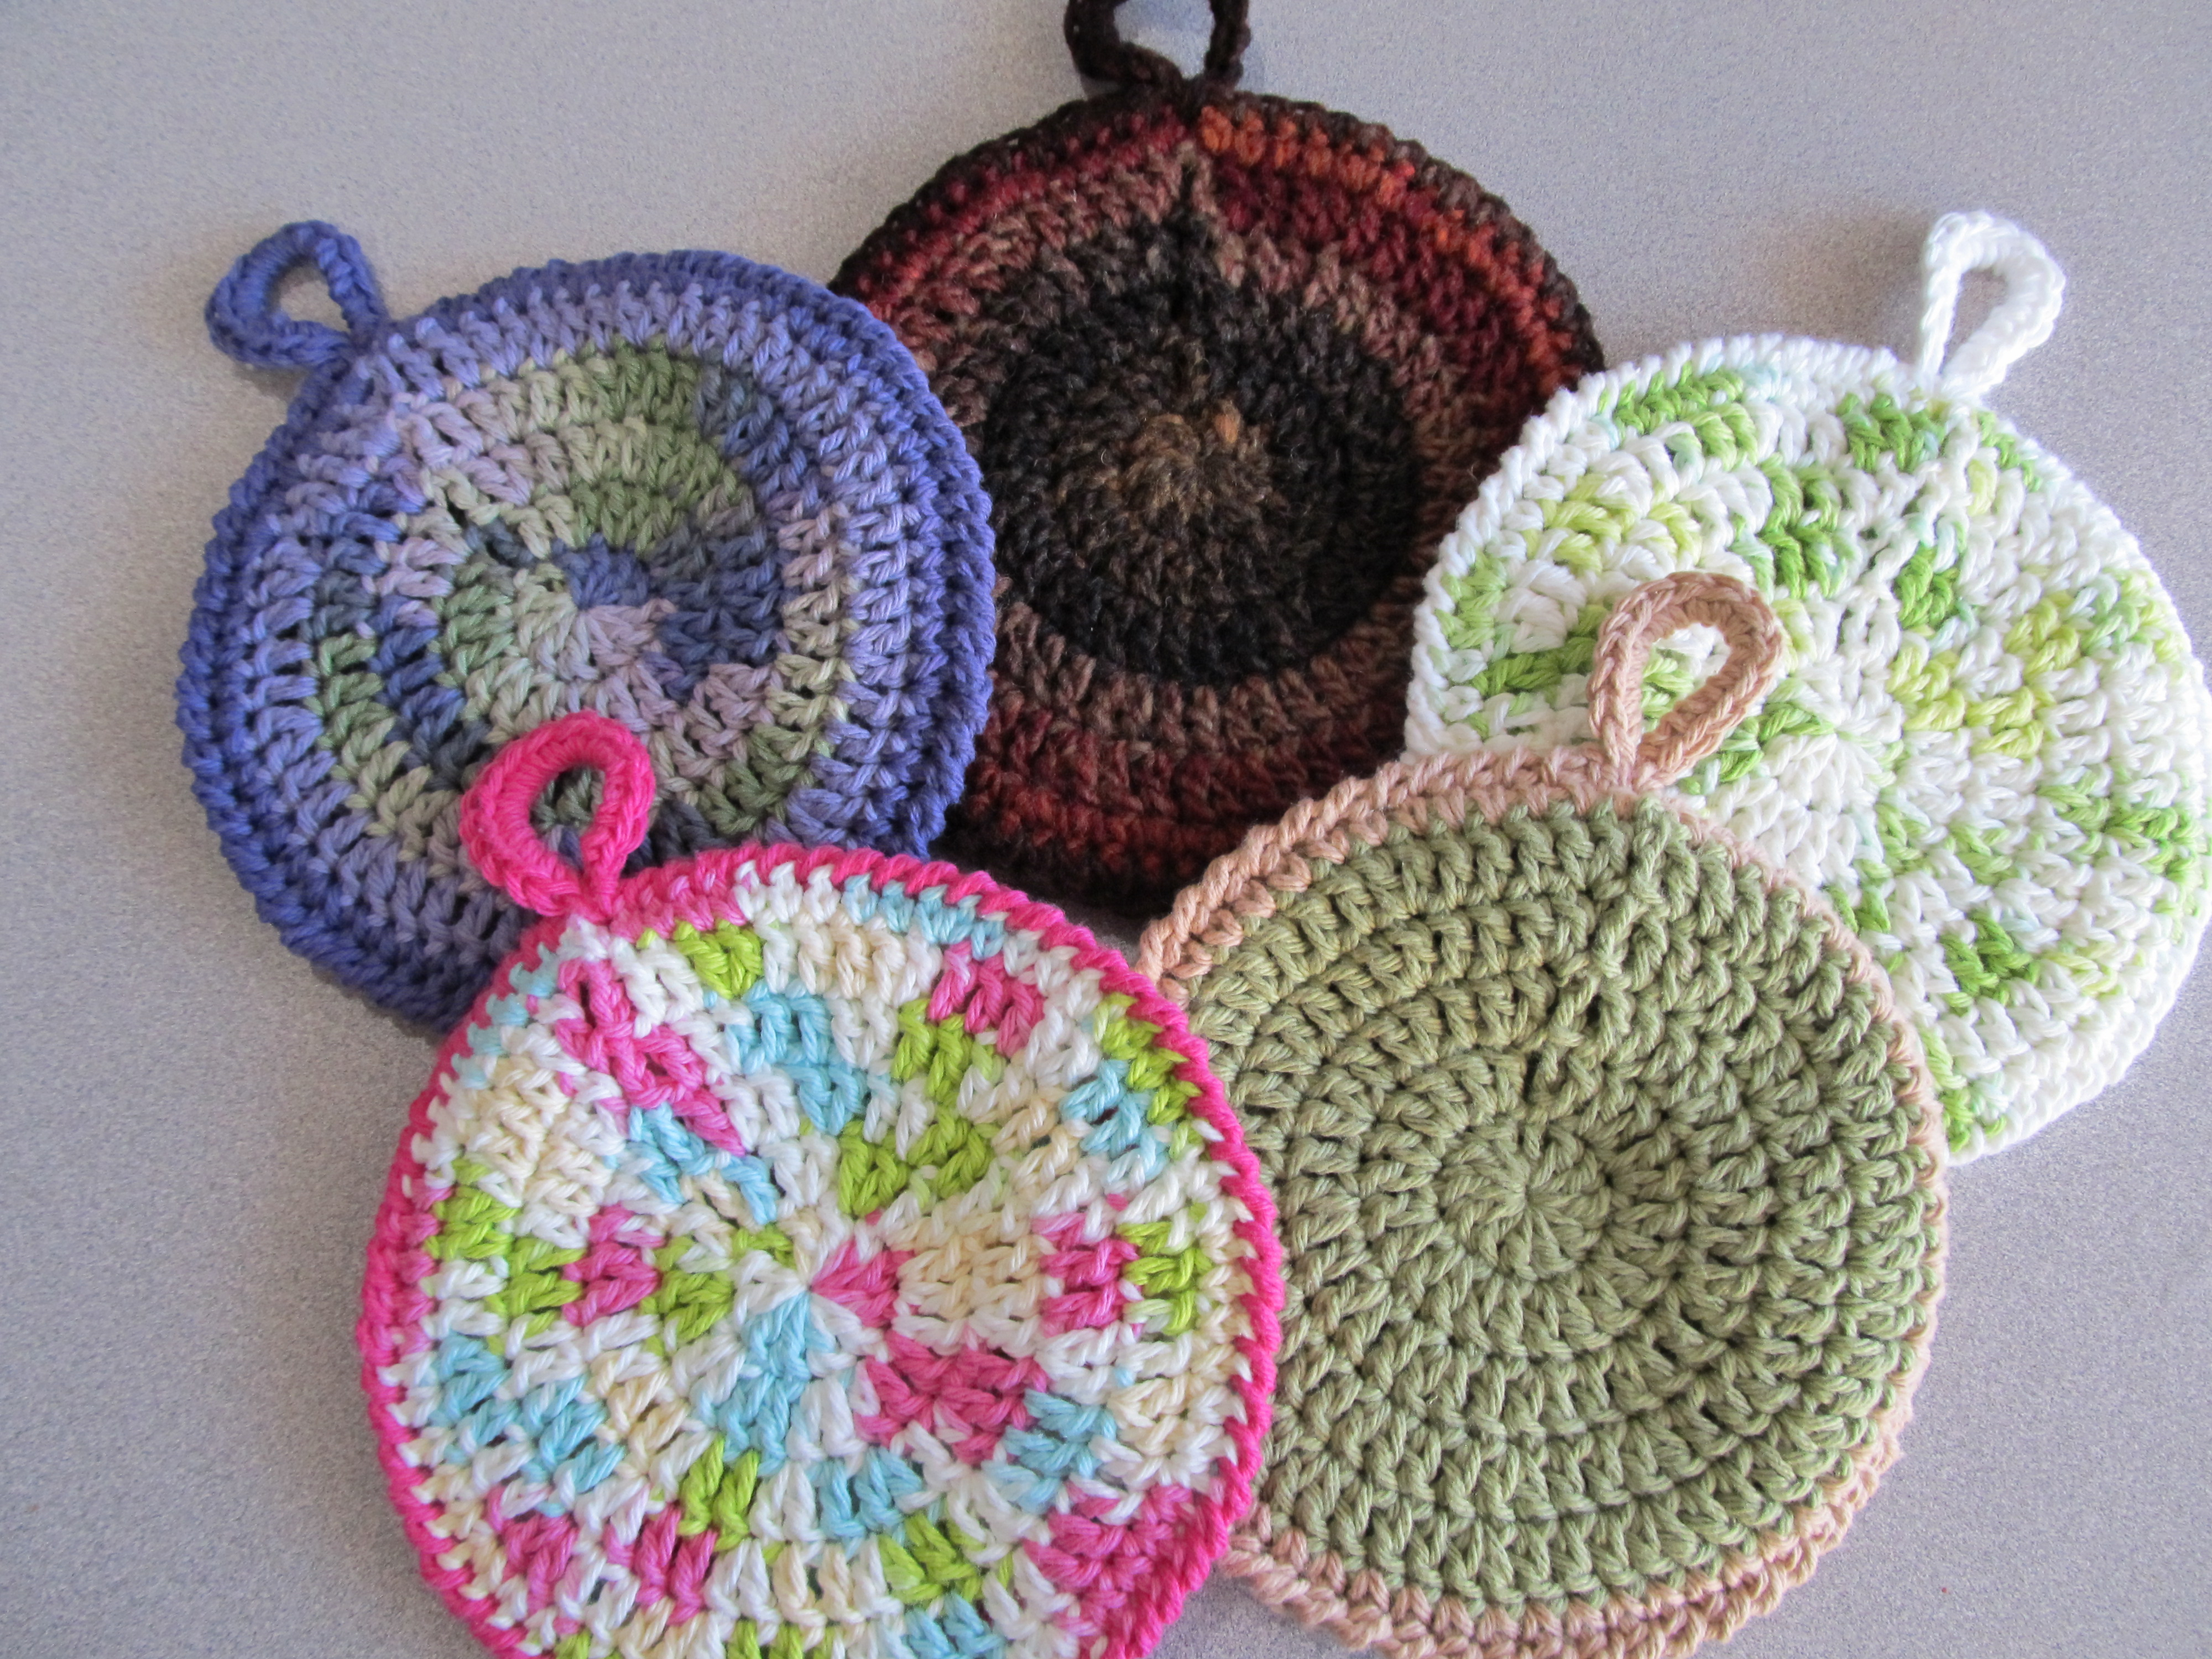 Free Crochet Hot Pad Patterns Circular Potholders The Caped Crocheter